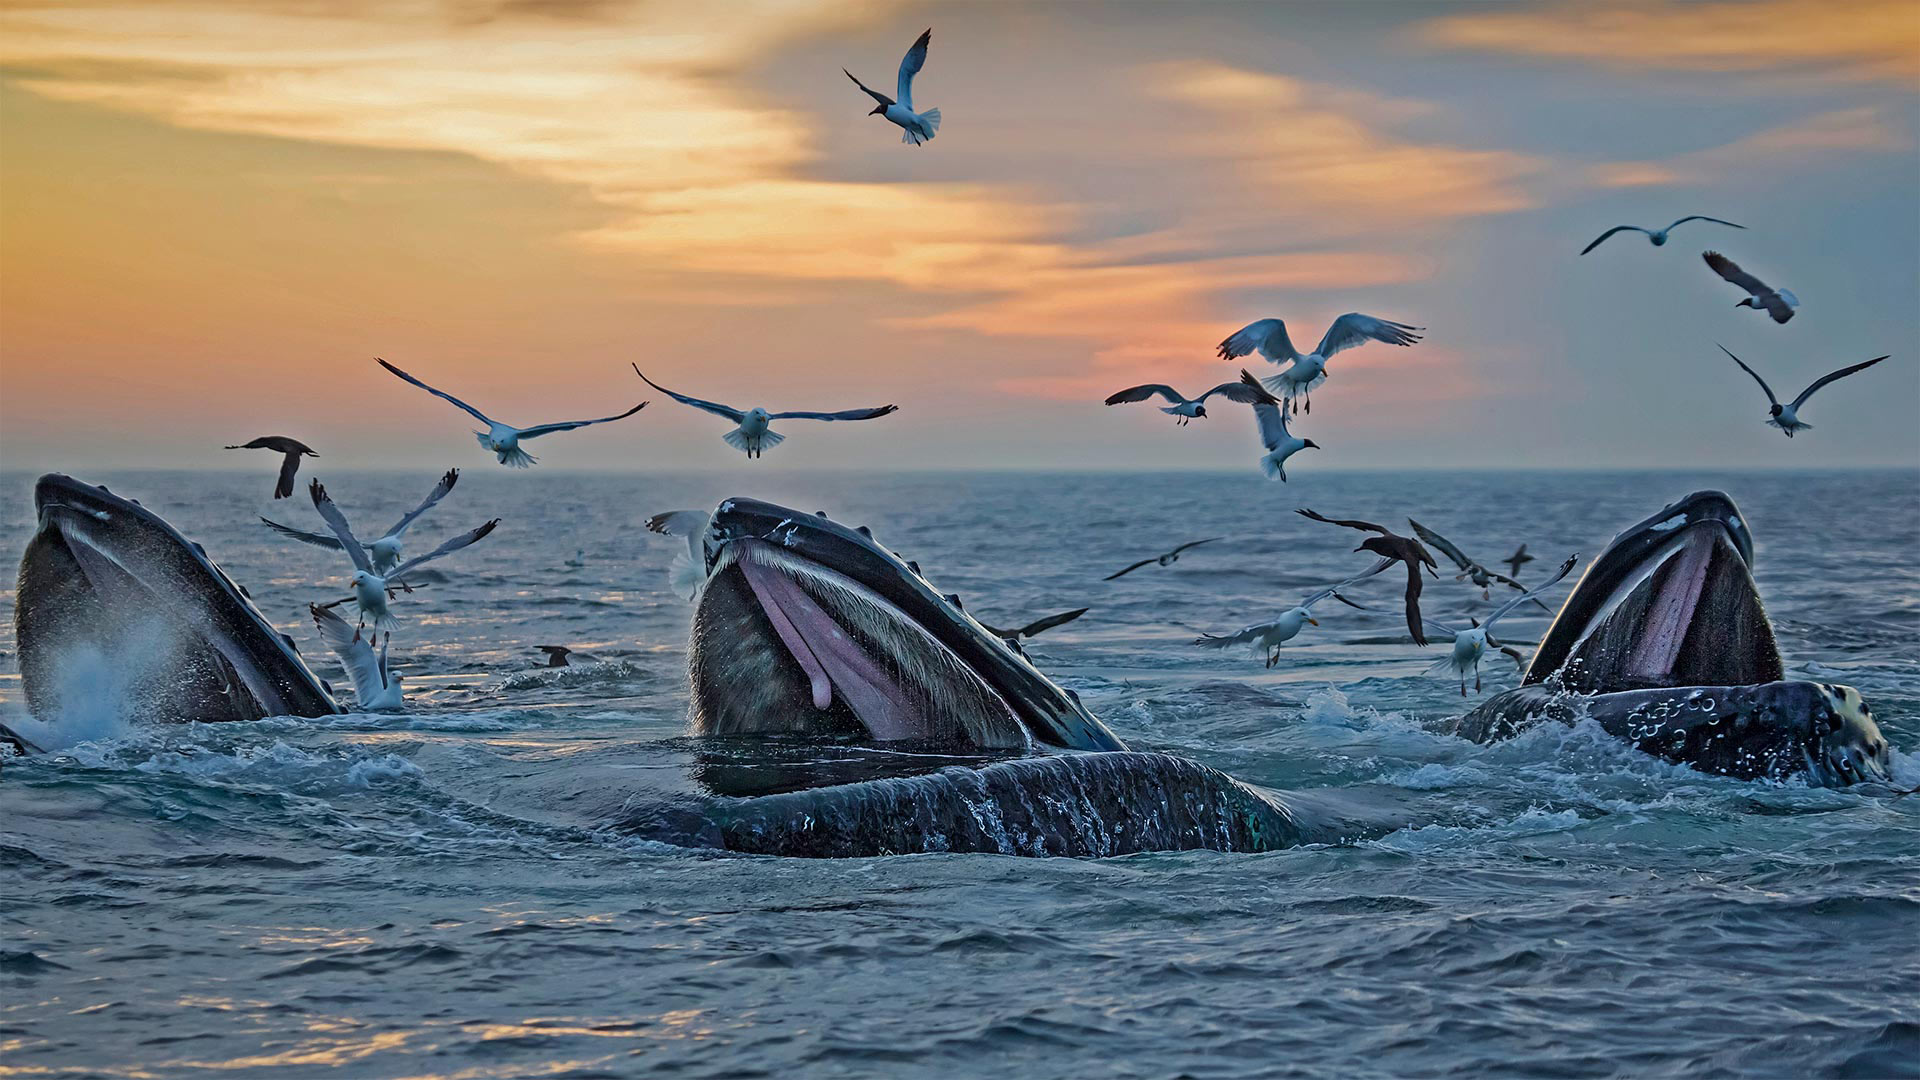 Humpback whales off the coast of Massachusetts - Eric Kulin/plainpicture)